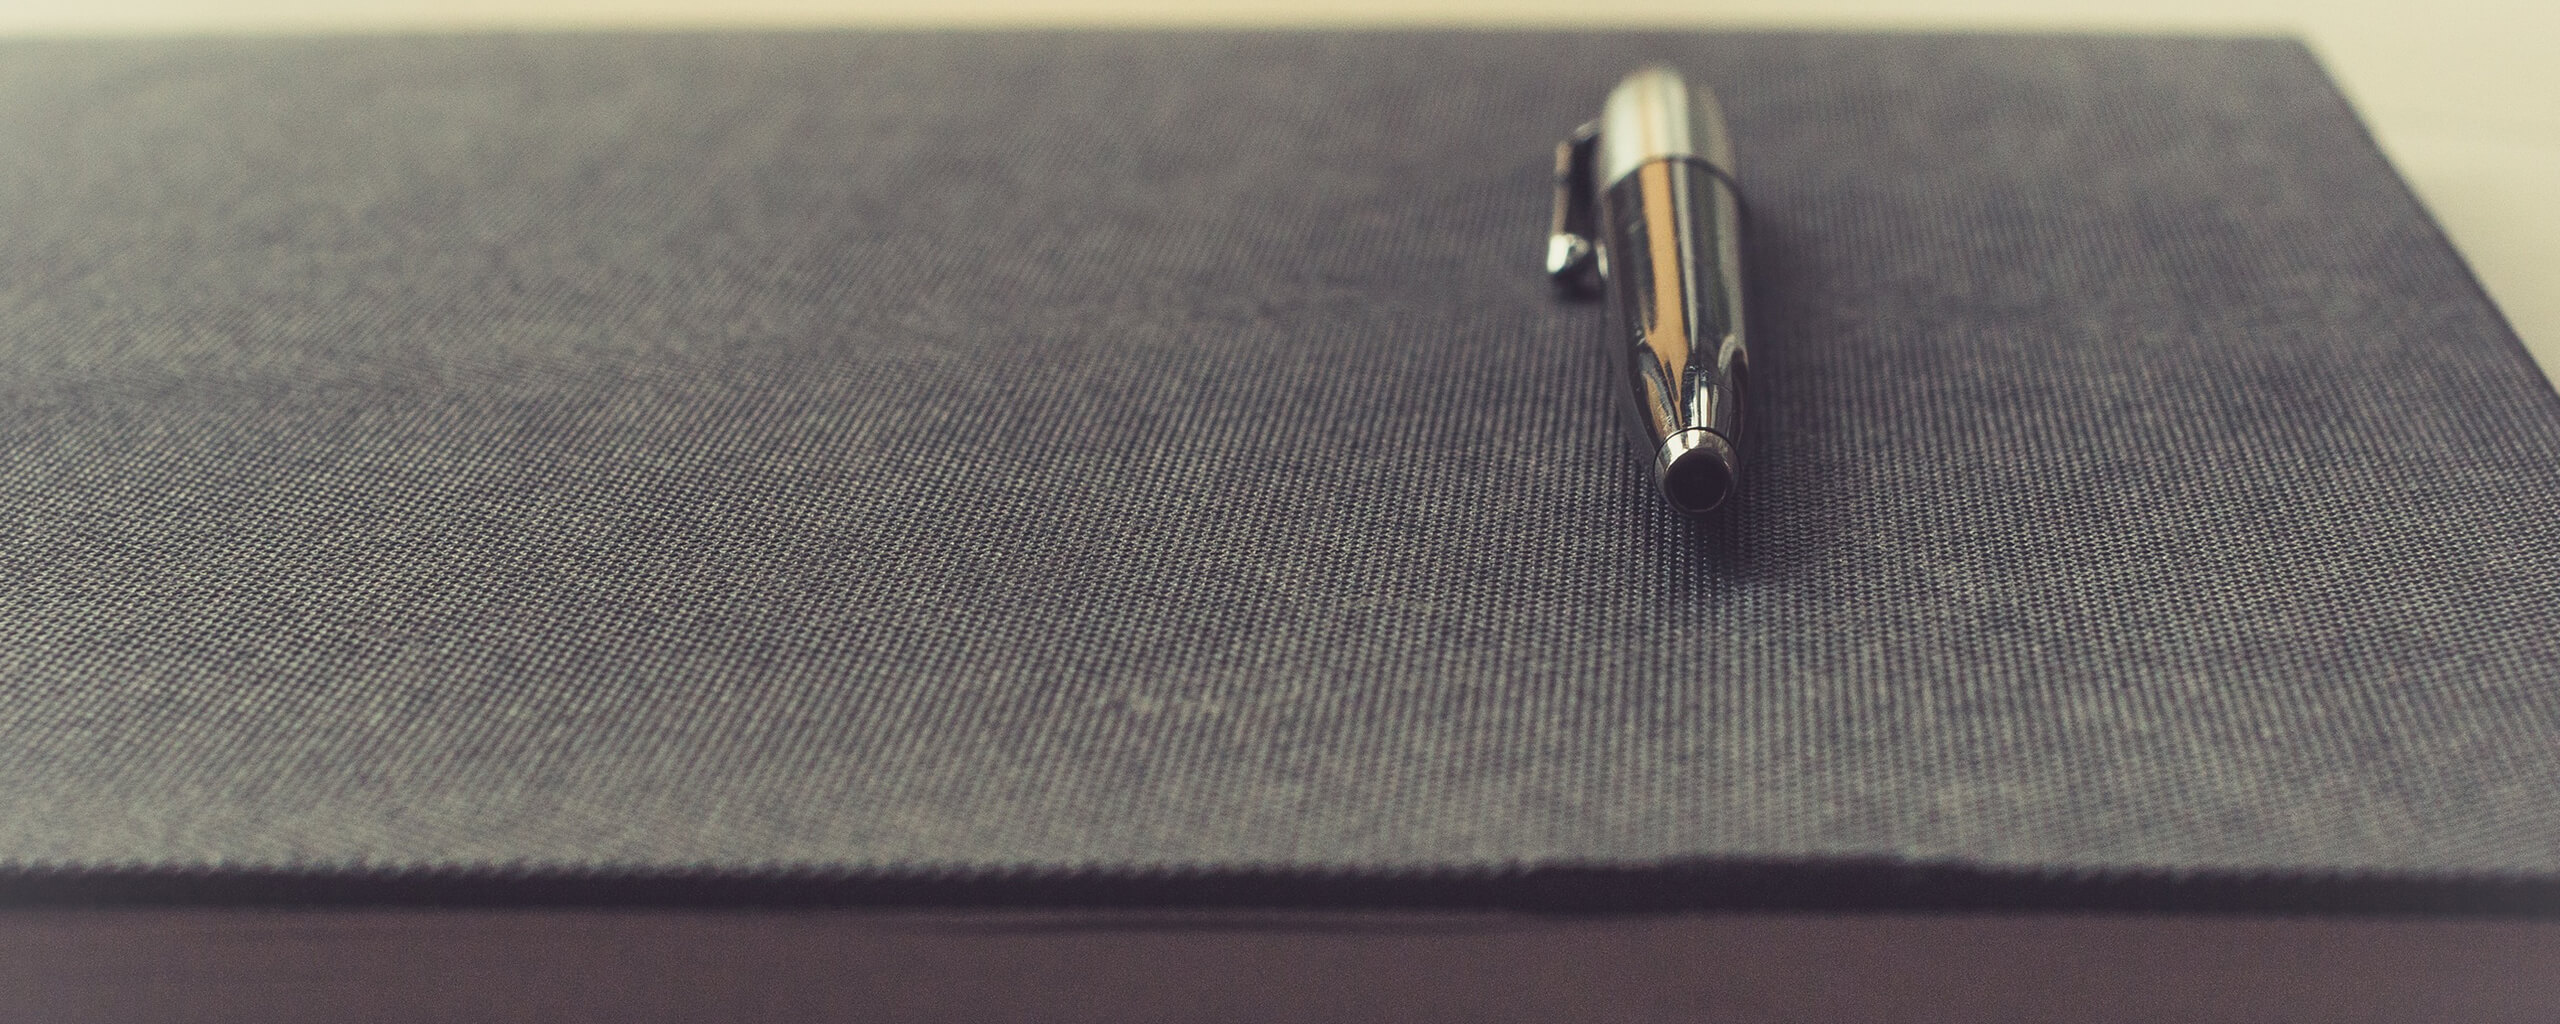 pen over a notebook